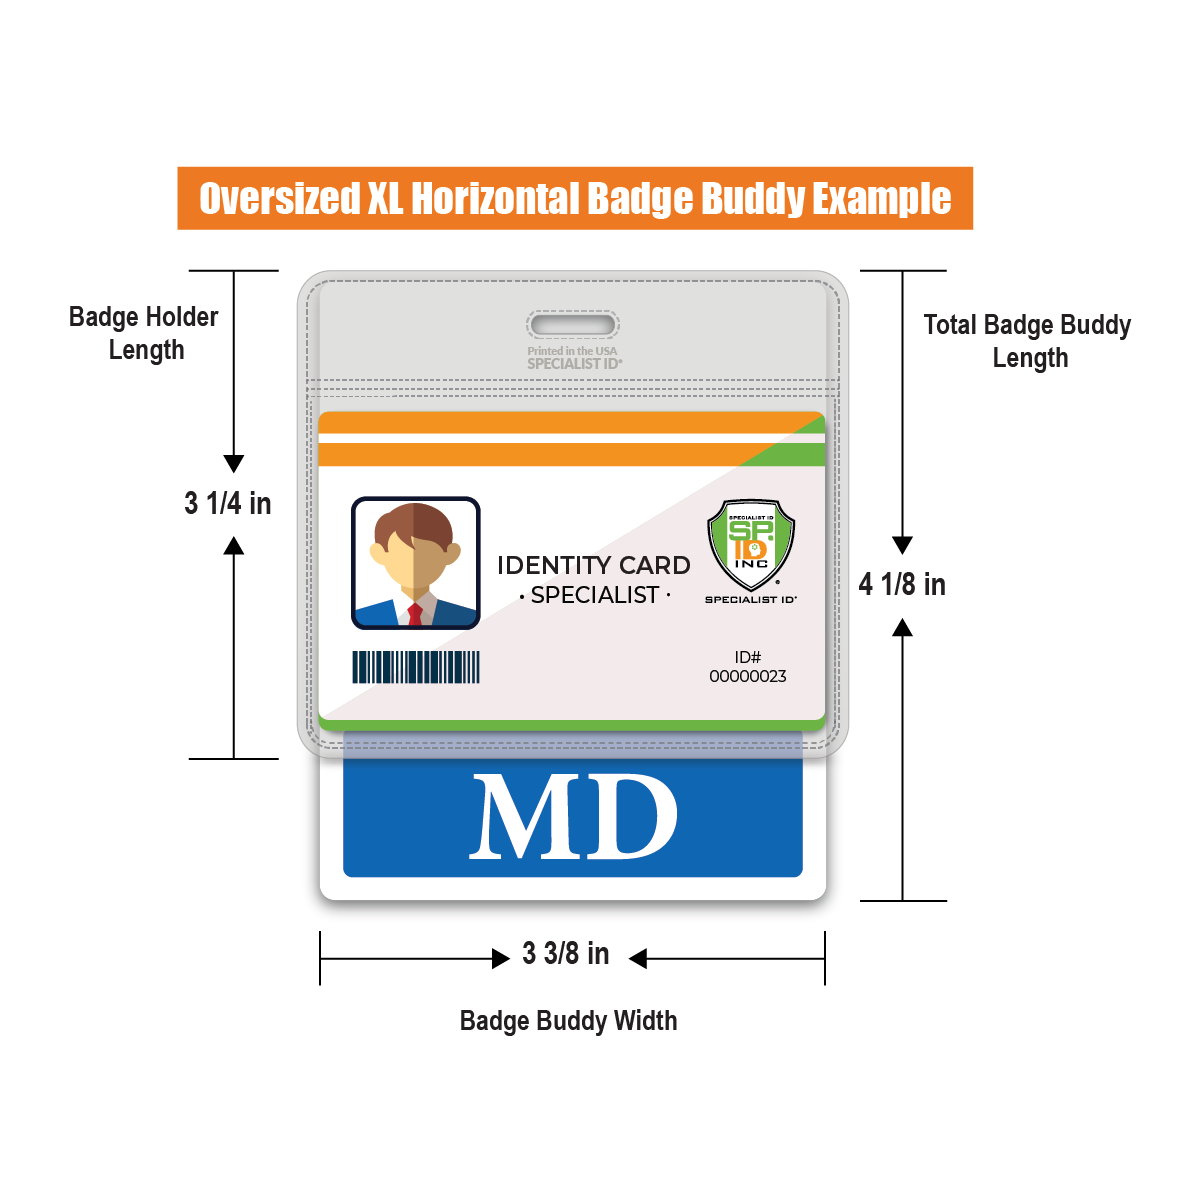 oversized MD badge buddy horizontal - 3 3/8 X 4 1/8 - wear with existing ID badge holder sleeve